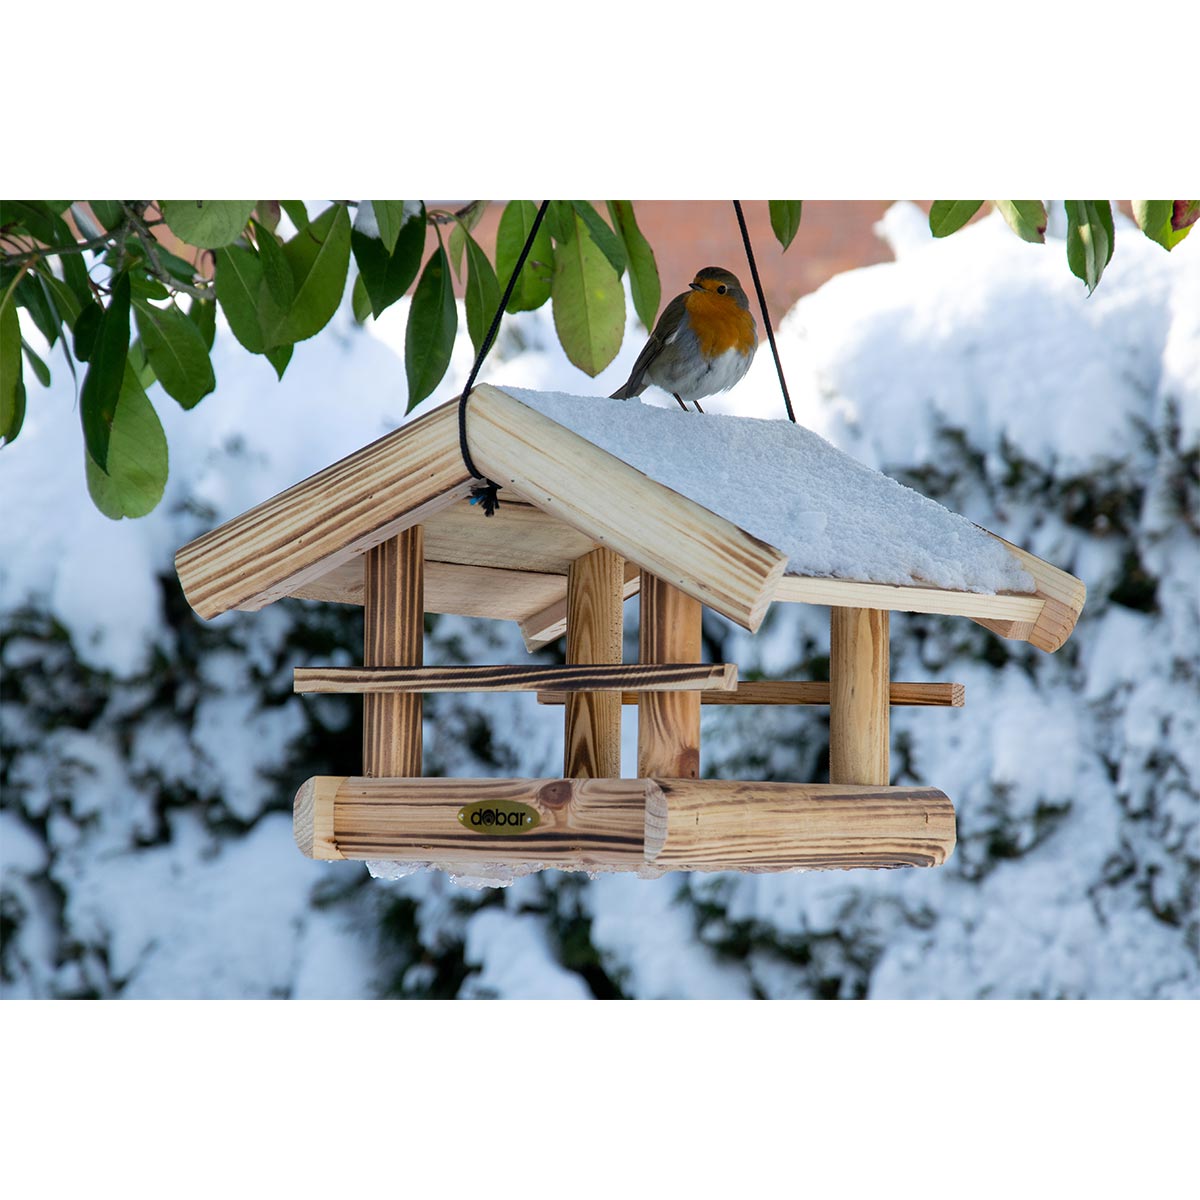 Vogelfutterhaus zum Aufhängen mit herausnehmbarer Futterschale, 19